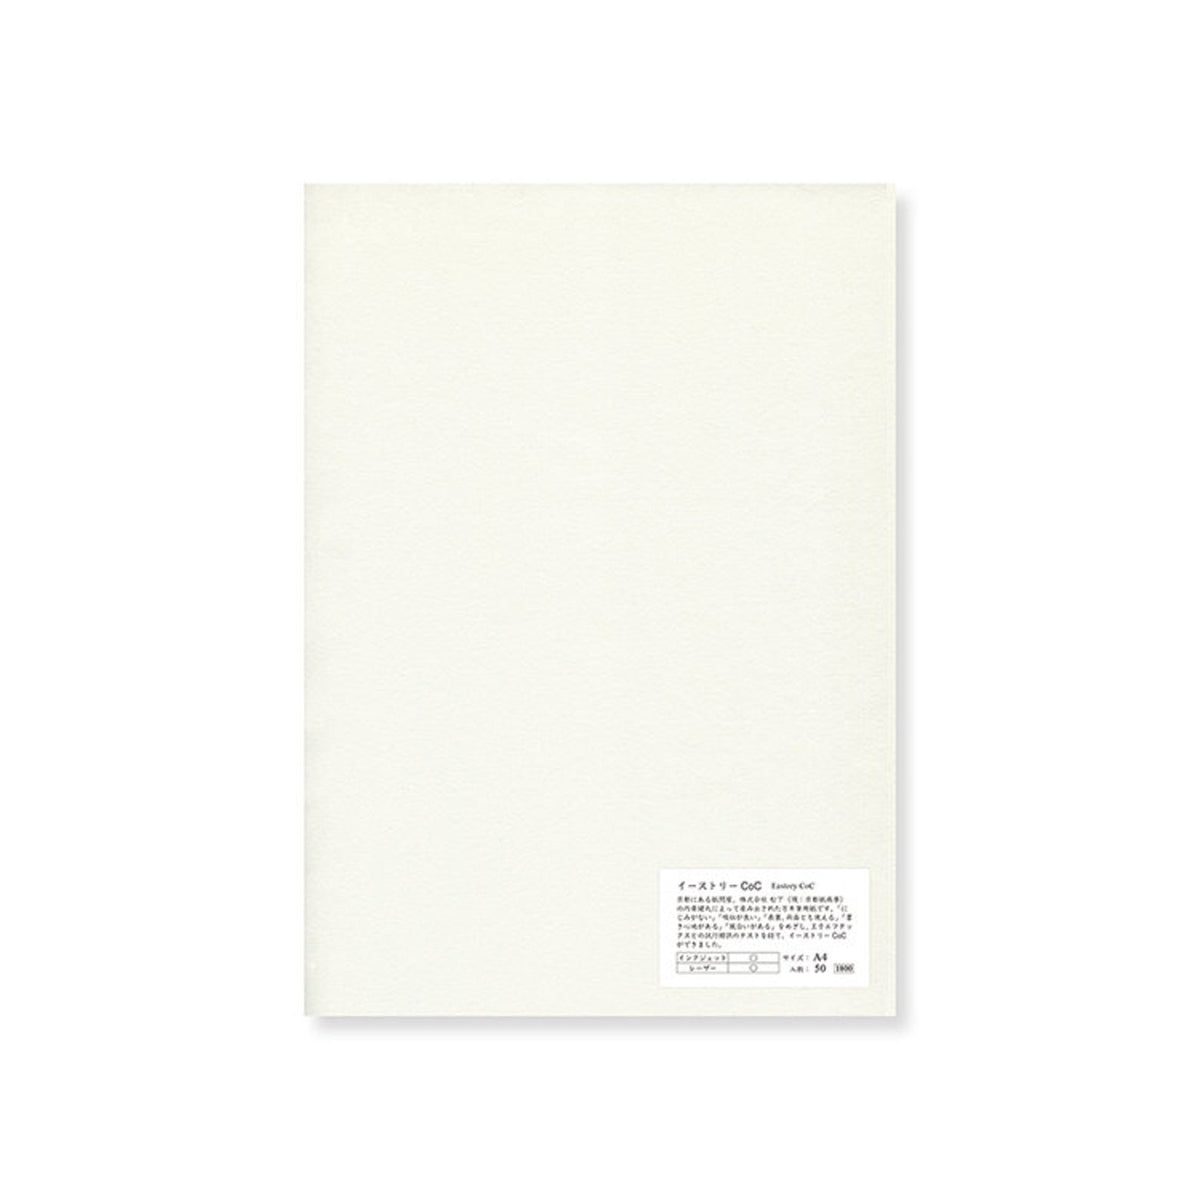 Yamamoto Paper Eastory CoC A4 Loose Leaf 50 Sheets